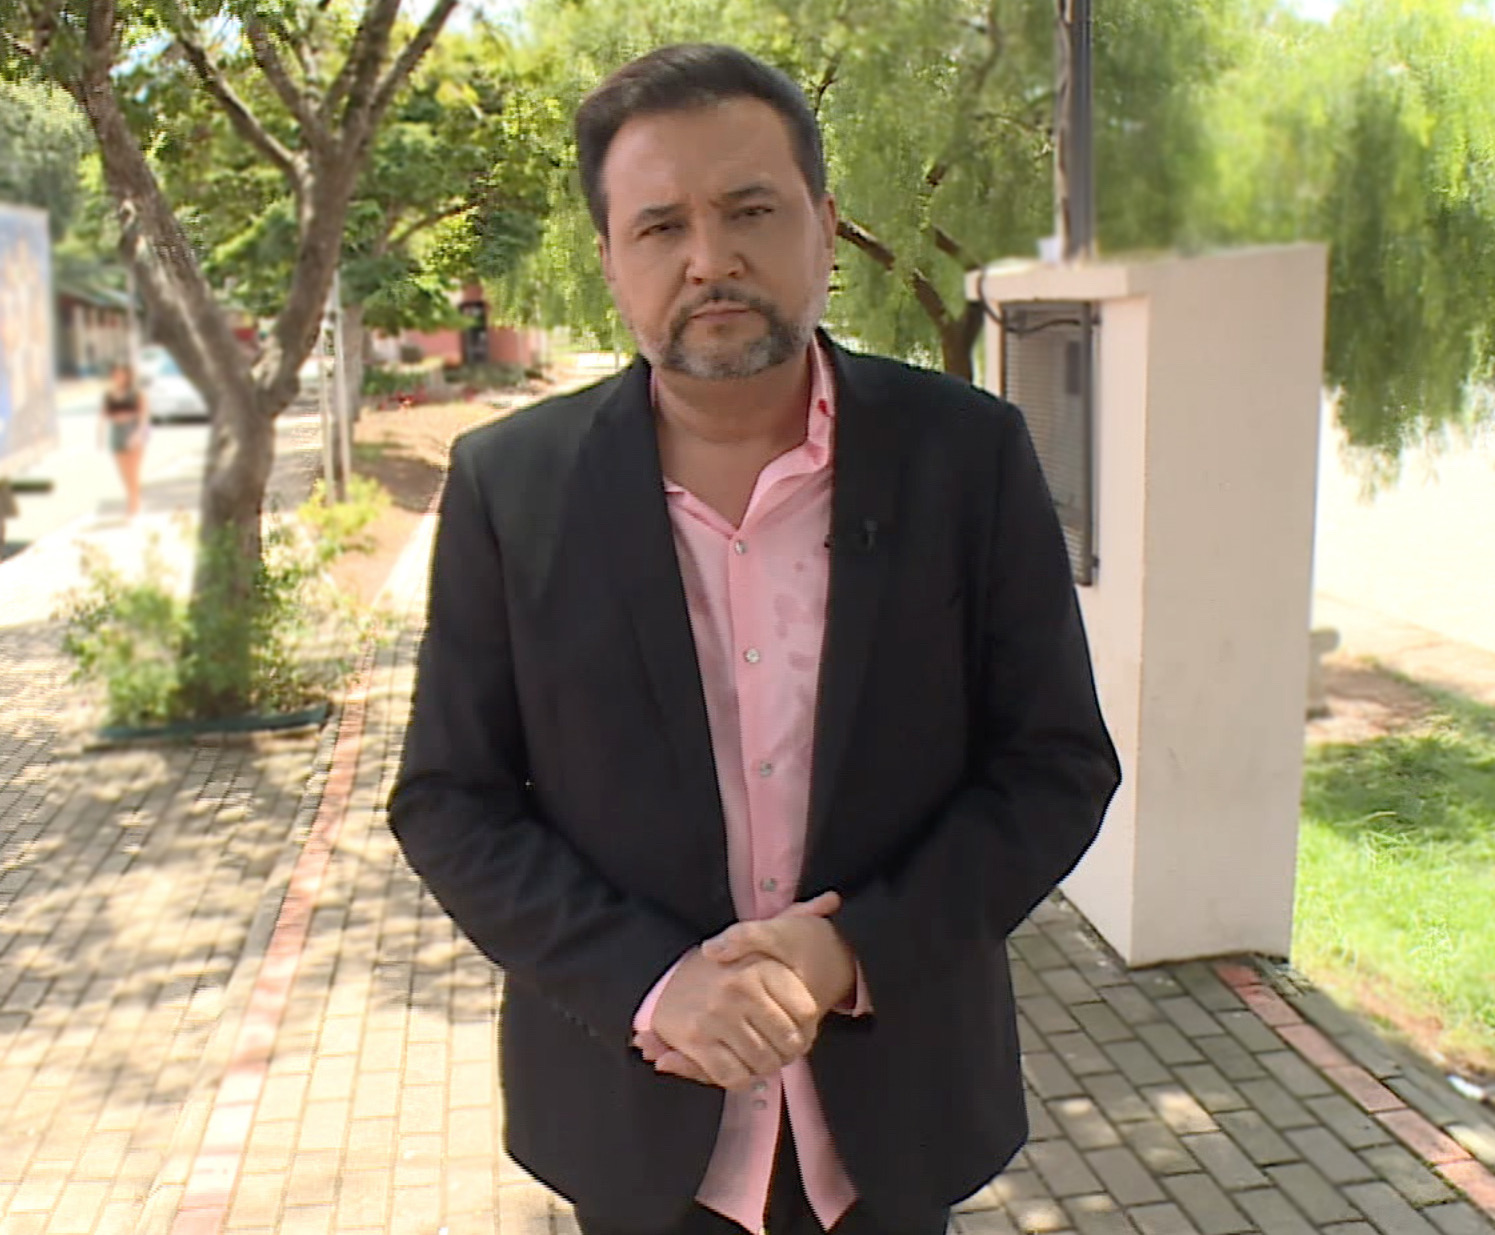 Exclusivo na RedeTV!: Geraldo Luís mostra como vive Andreas von Richthofen no ‘Geral do Povo’ deste domingo (24)